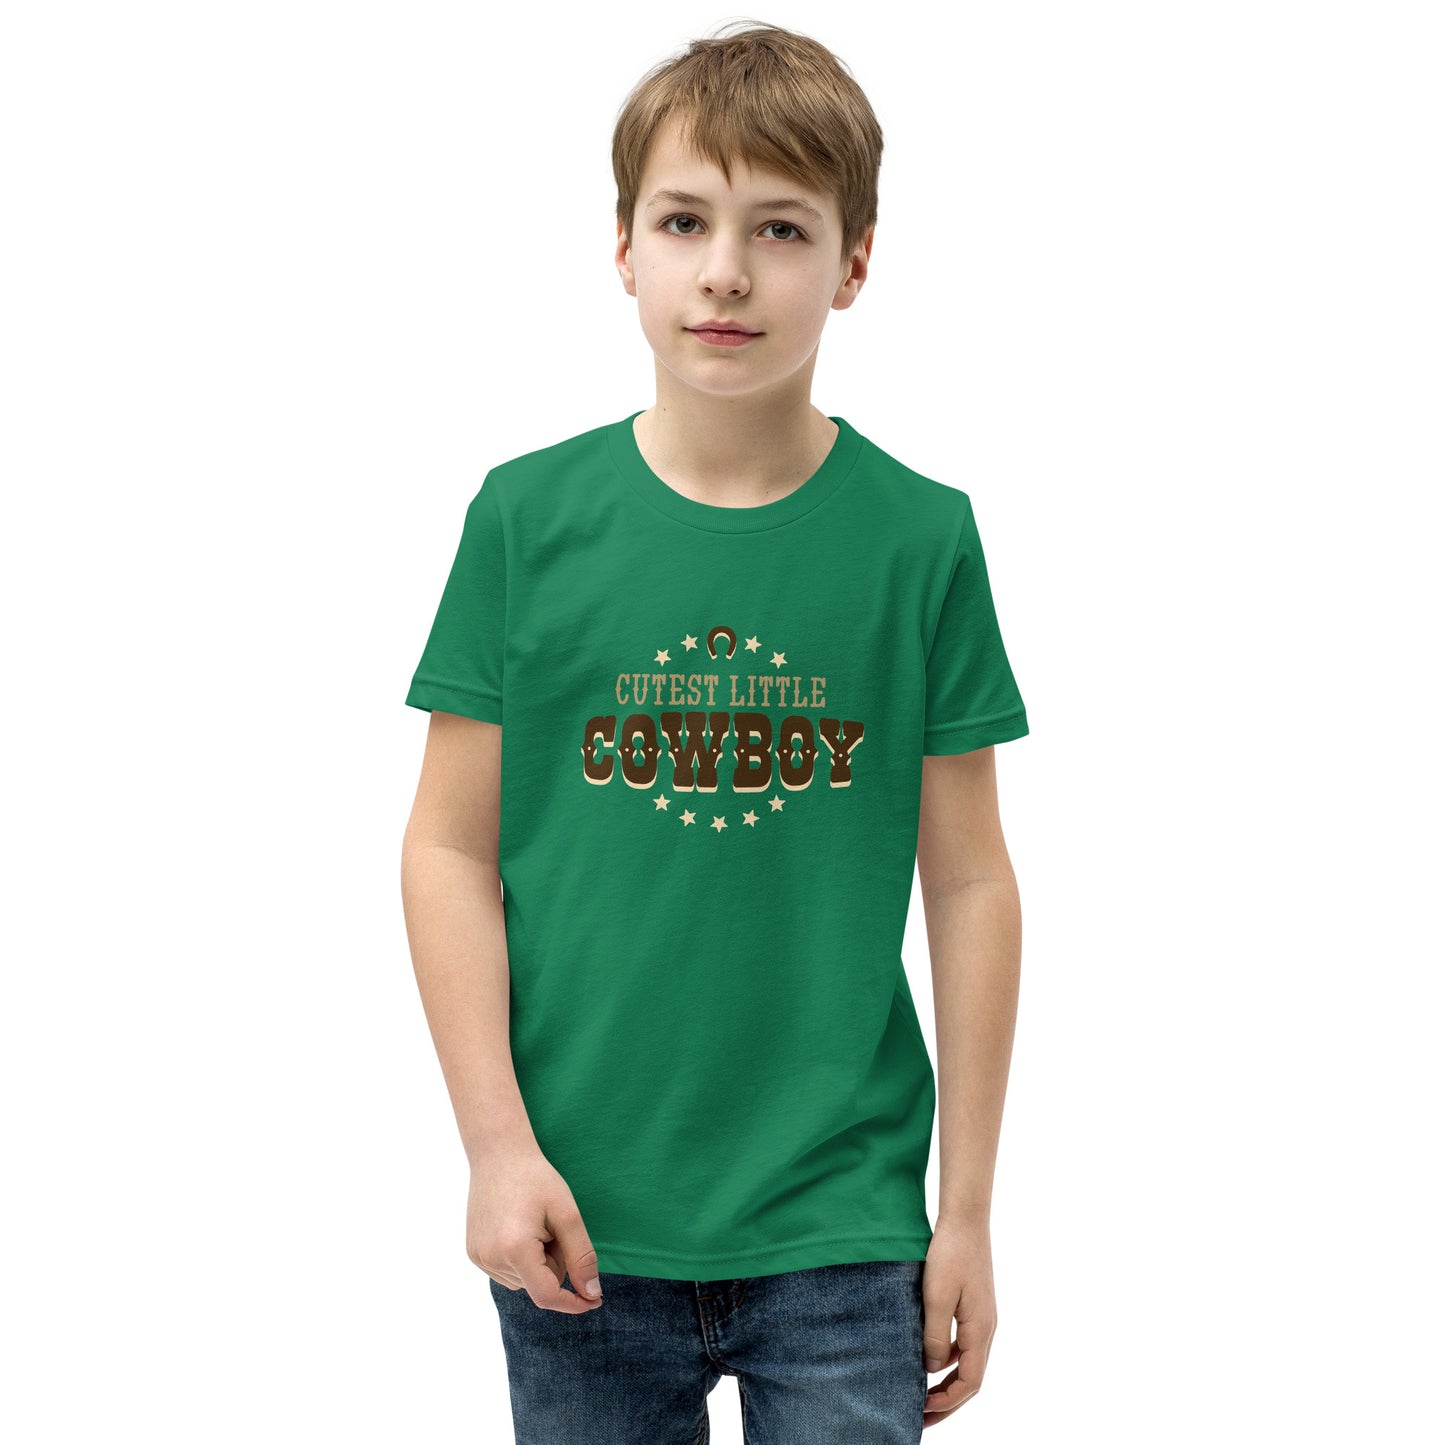 Cutest Little Cowboy Youth Short Sleeve T-Shirt